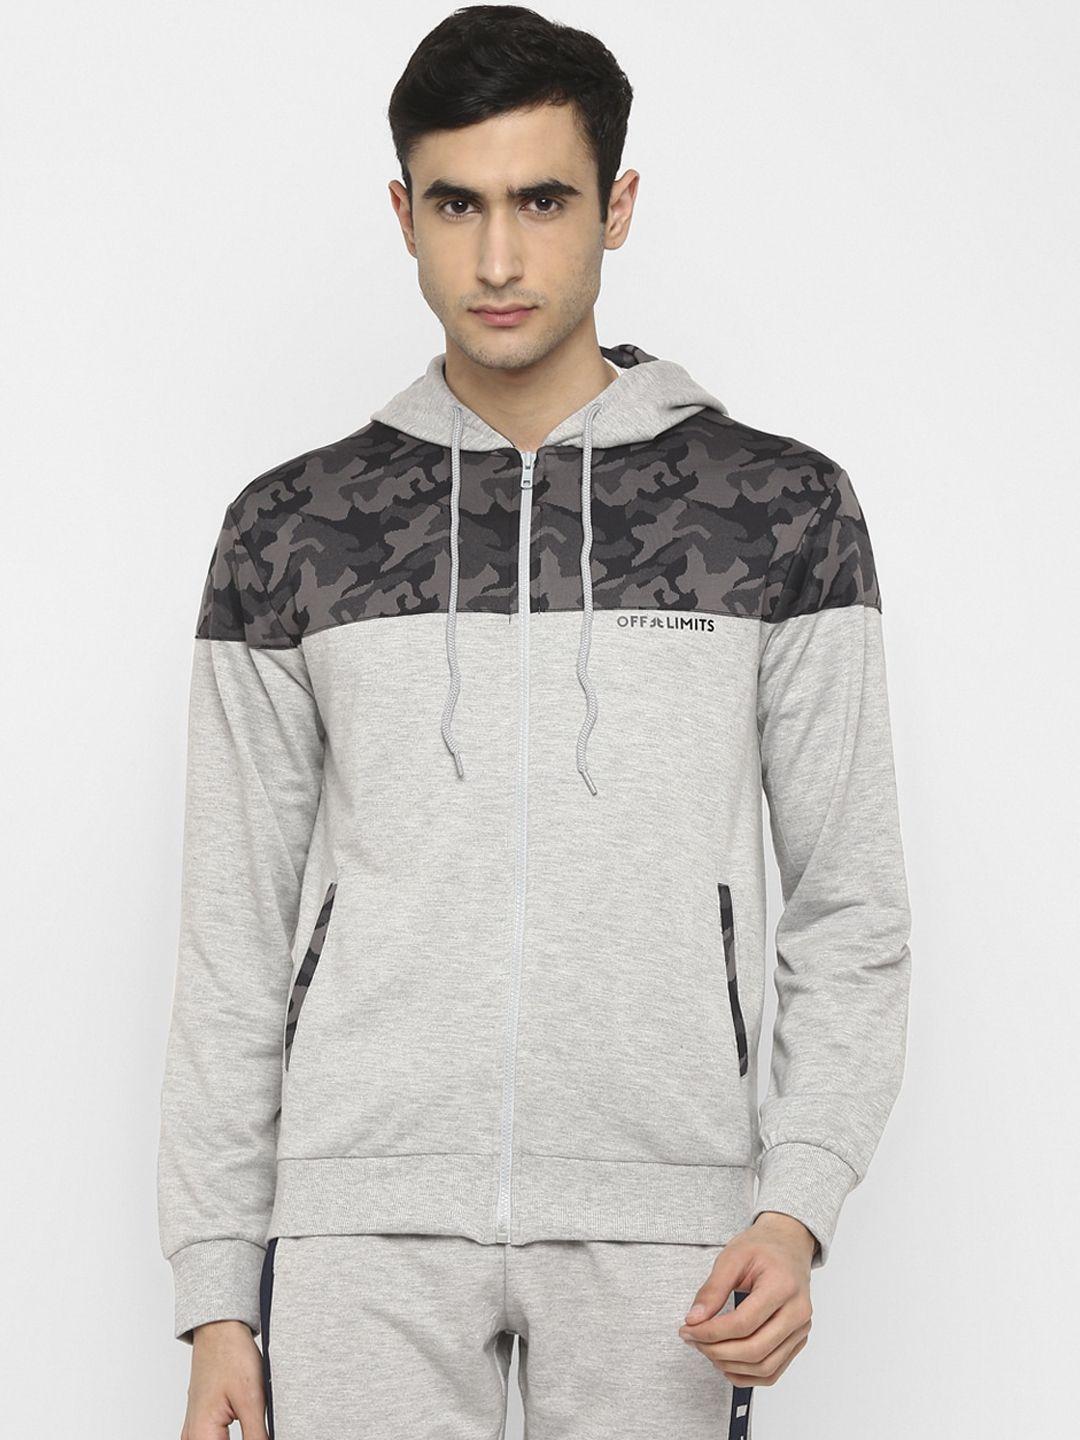 off-limits-men-grey-melange-abstract-printed-sweatshirt